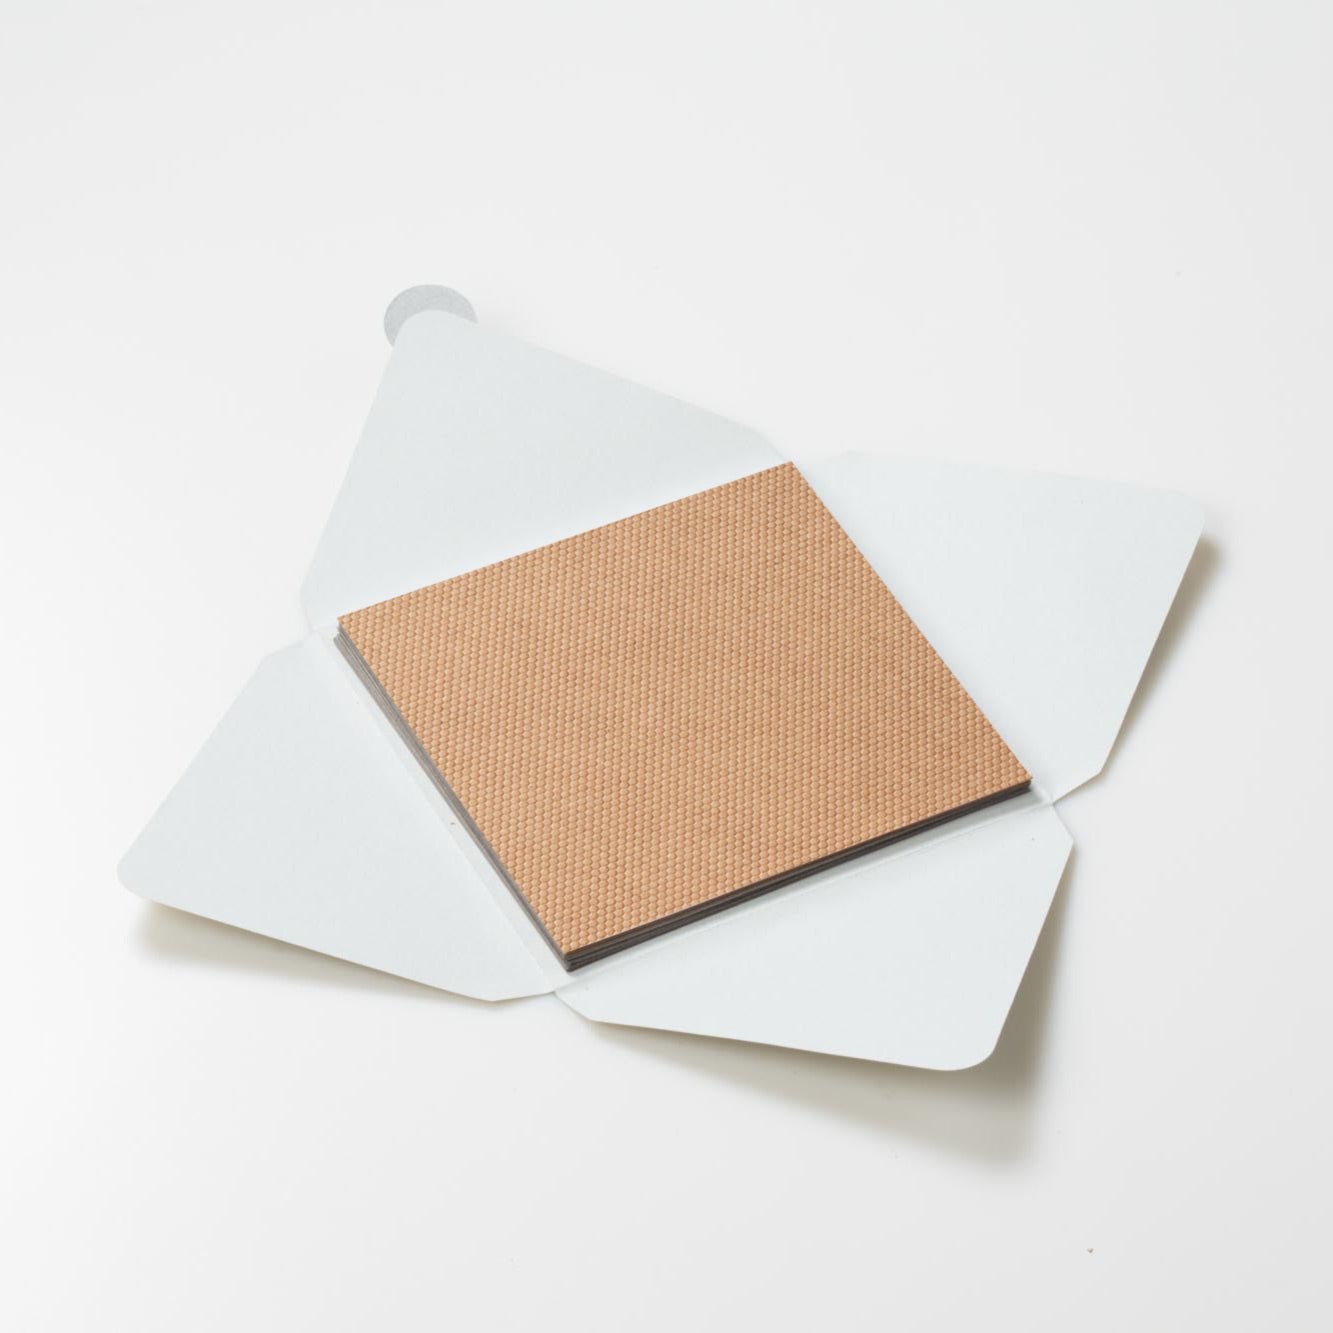 Kit di fogli "Avana embossing Nido d'Ape" formato origami 15 cm x 15 cm - Manamant Paper Tales -FGB770168M2D